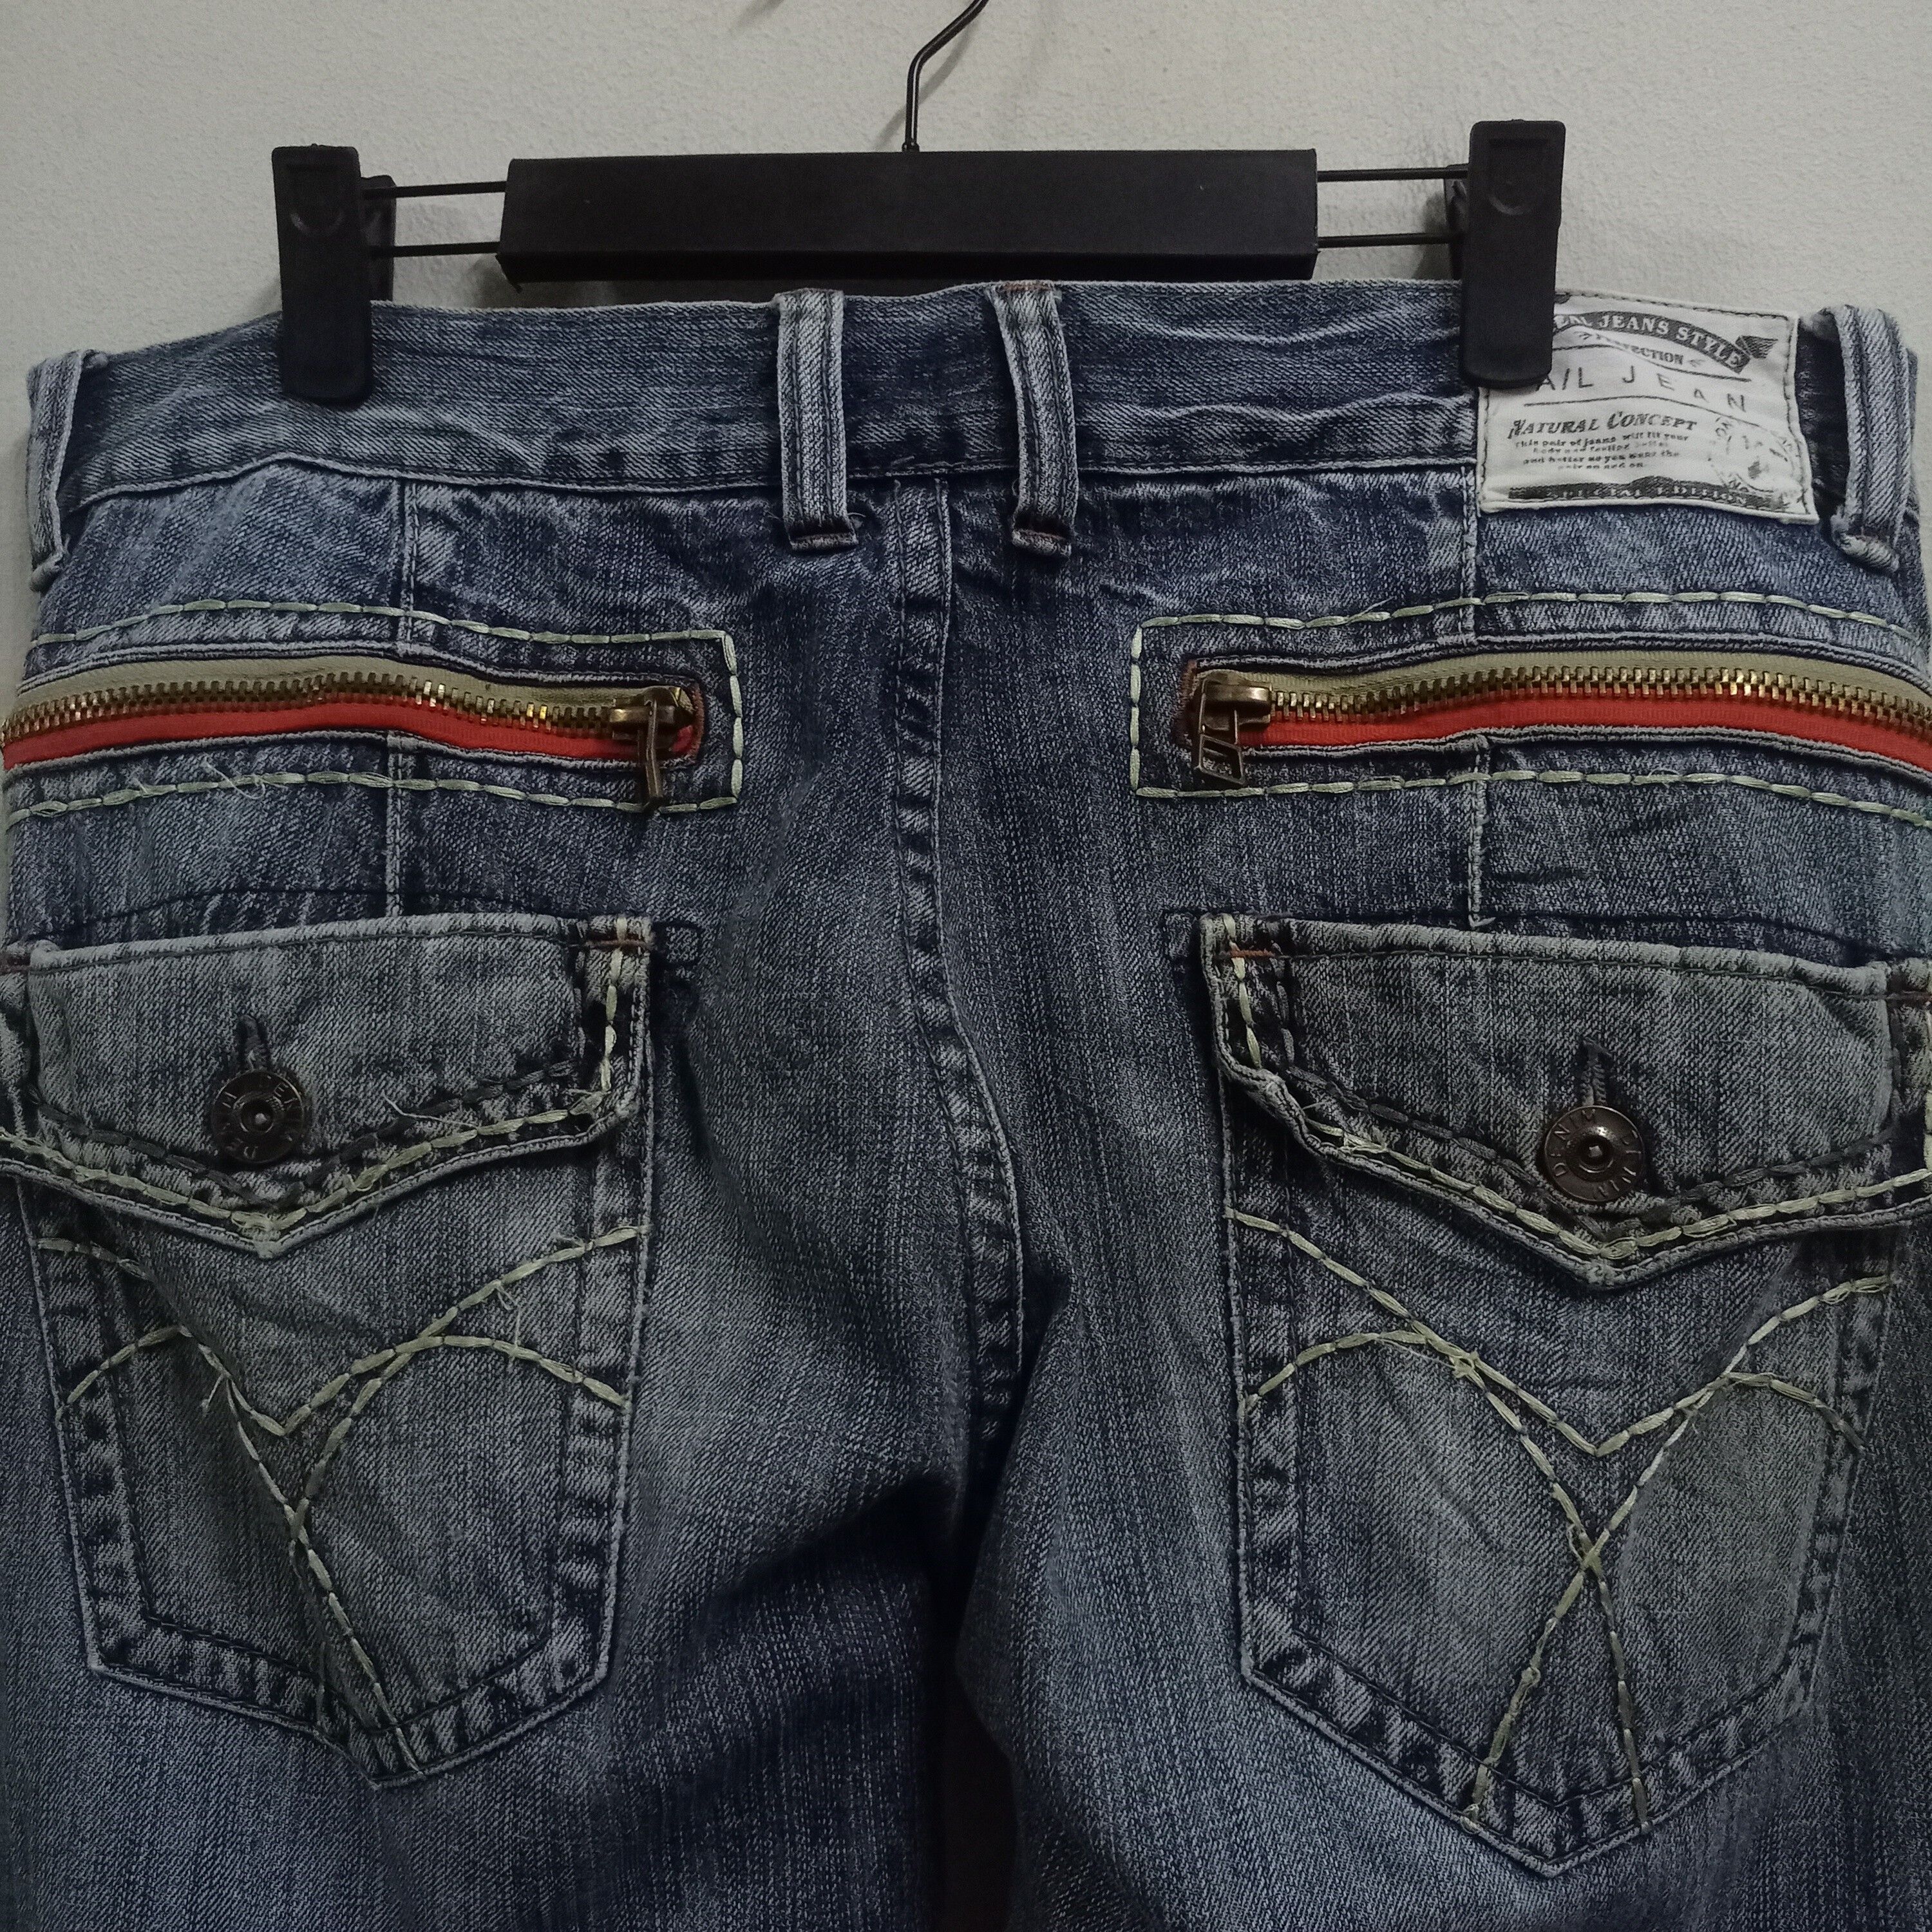 Distressed Denim Vintage Anti Label Blue Wash Distressed Baggy Jeans 35x29 Size US 35 - 6 Thumbnail